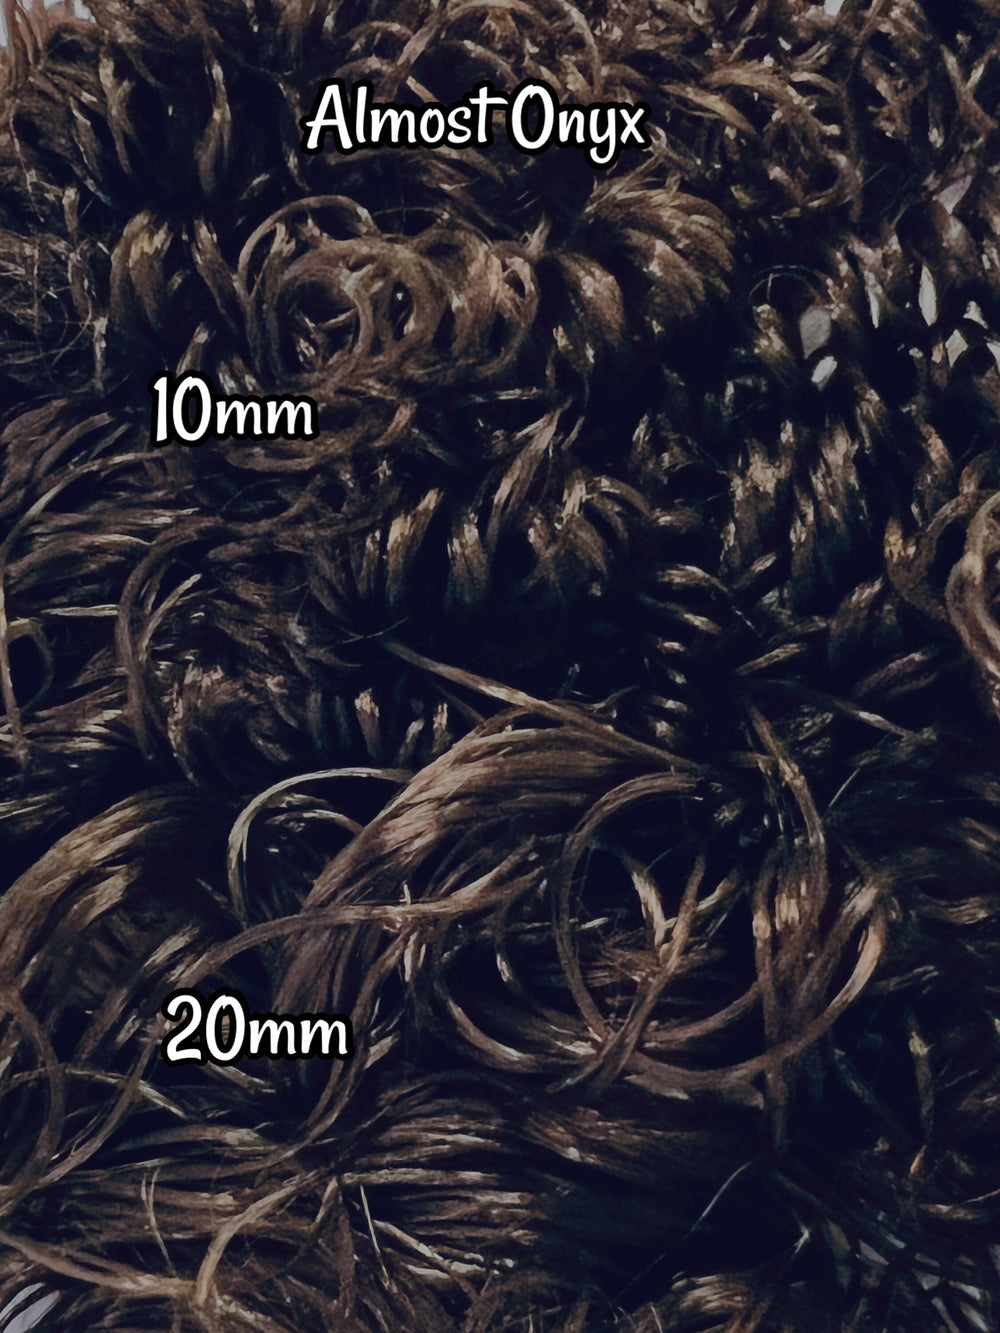 DG Curly Almost Onyx N457M 10mm 20mm dark brown 36 inch 0.5oz/14g pre-curled Nylon Doll Hair for rerooting fashion dolls